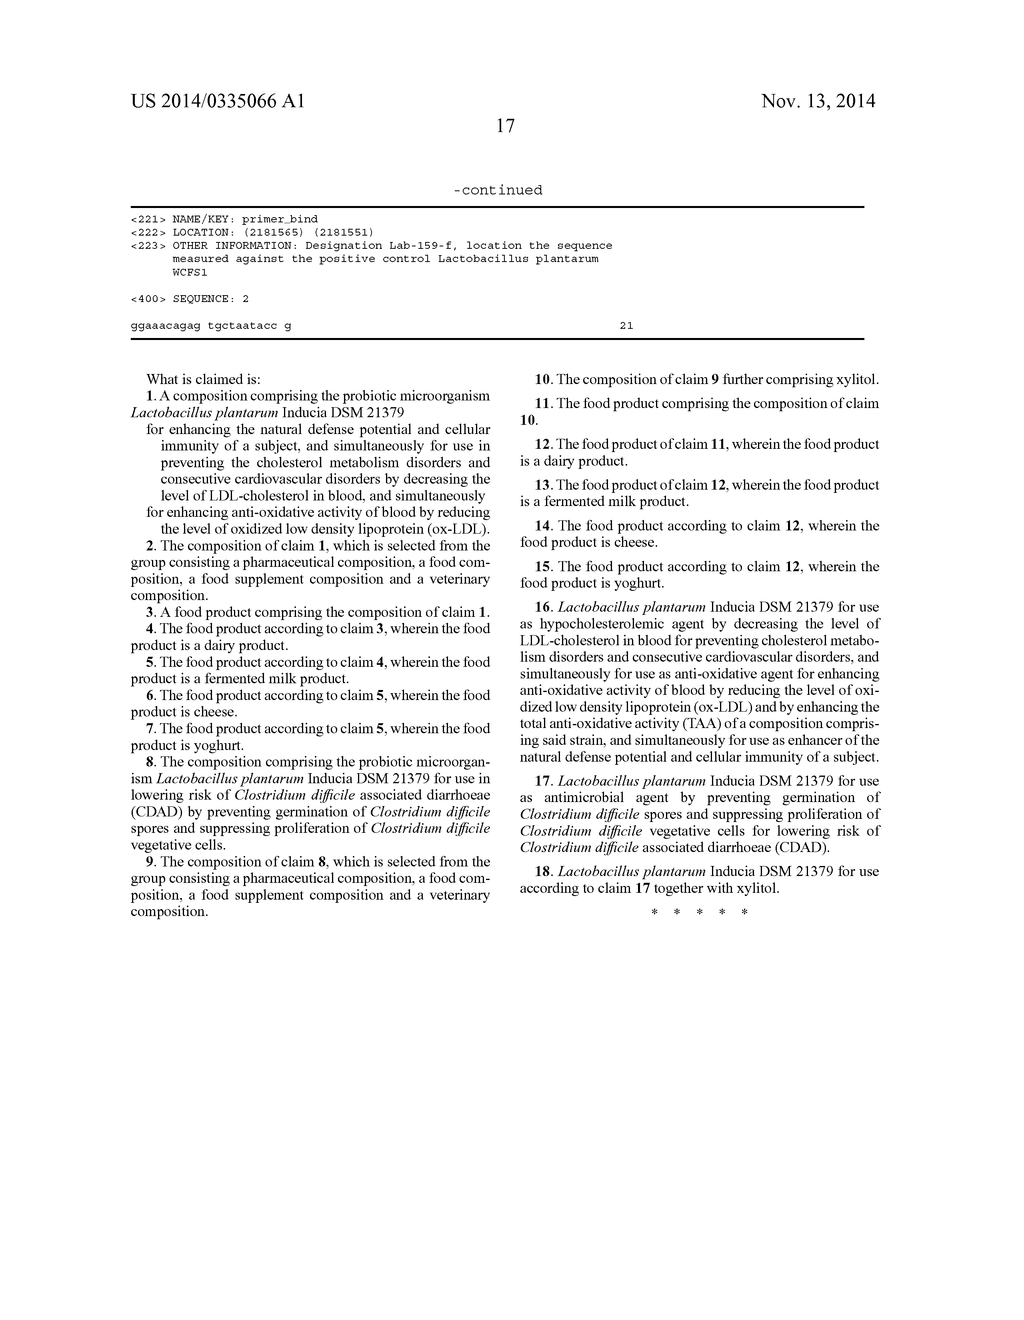 LACTOBACILLUS PLANTARUM INDUCIA DSM 21379 AS ENHANCER OF CELLULAR     IMMUNITY, HYPOCHOLESTEROLEMIC AND ANTI-OXIDATIVE AGENT AND ANTIMICROBIAL     AGENT AGAINST CLOSTRIDIUM DIFFICILE - diagram, schematic, and image 27